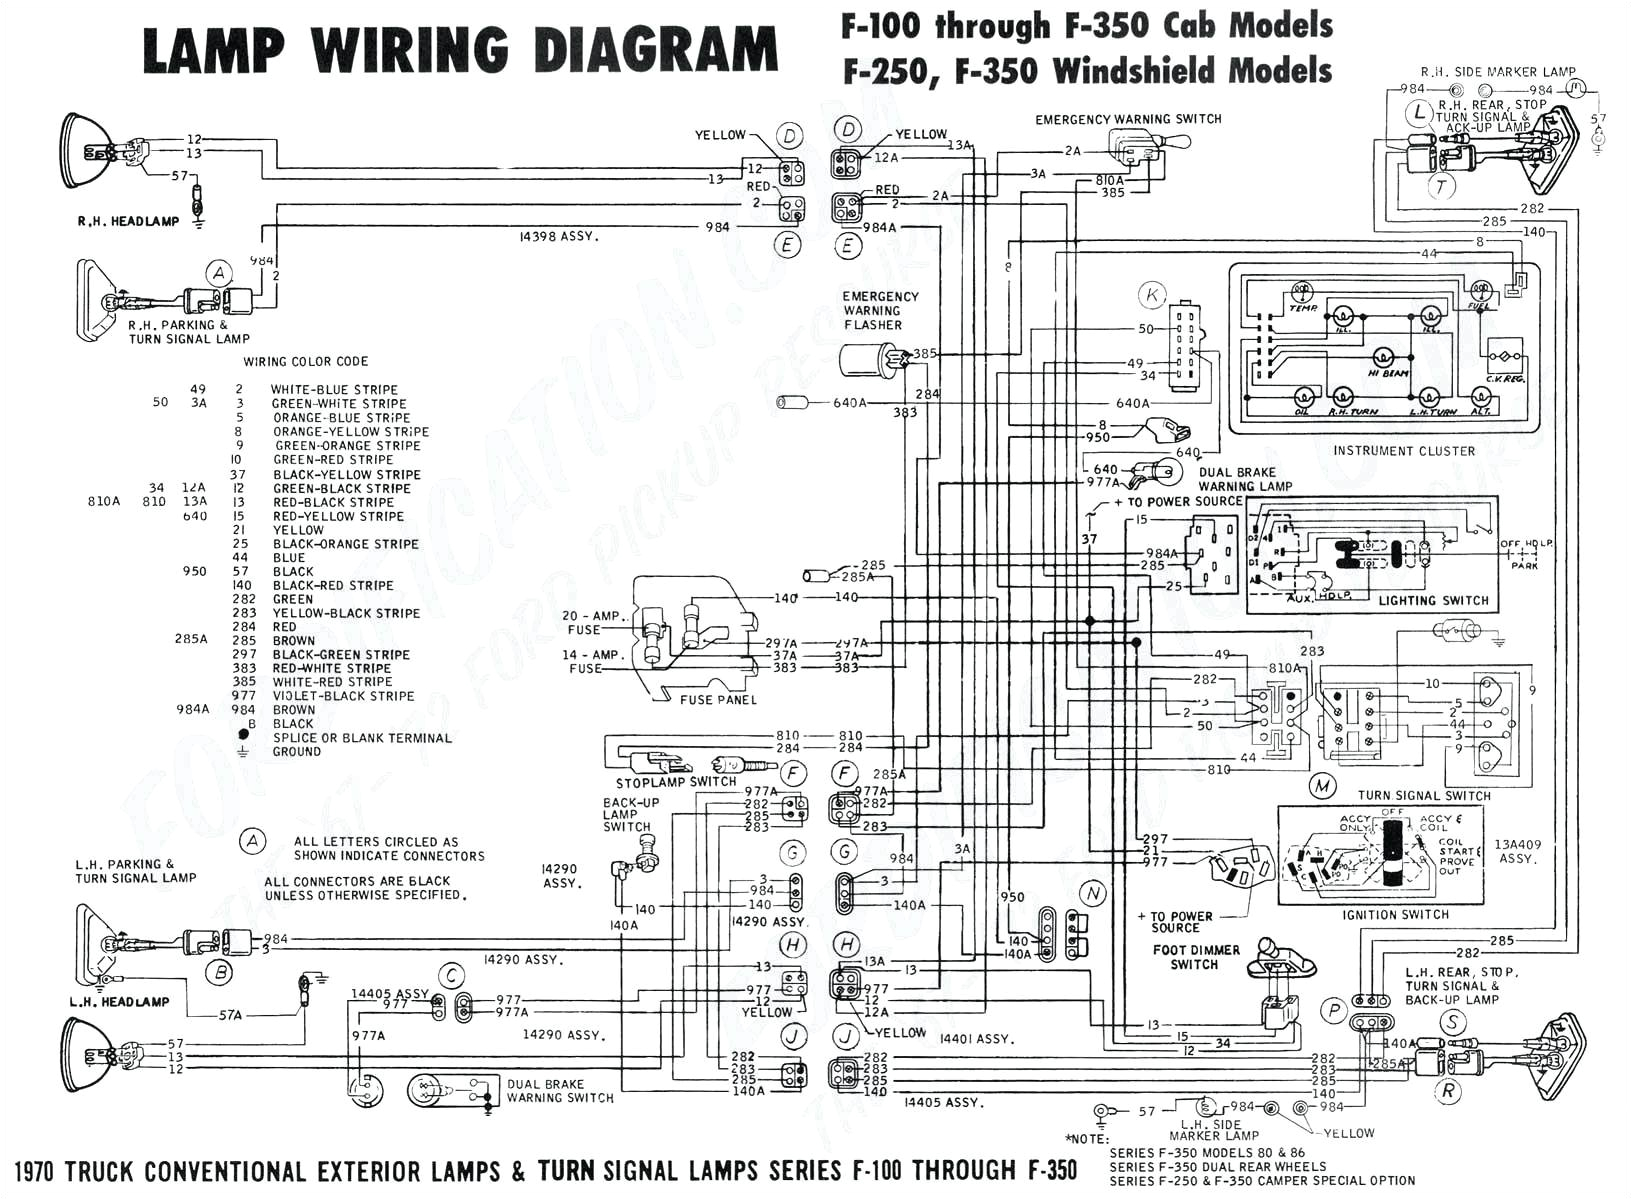 lionel ucs wiring diagram inspirational semi trailer wiring diagram image jpg